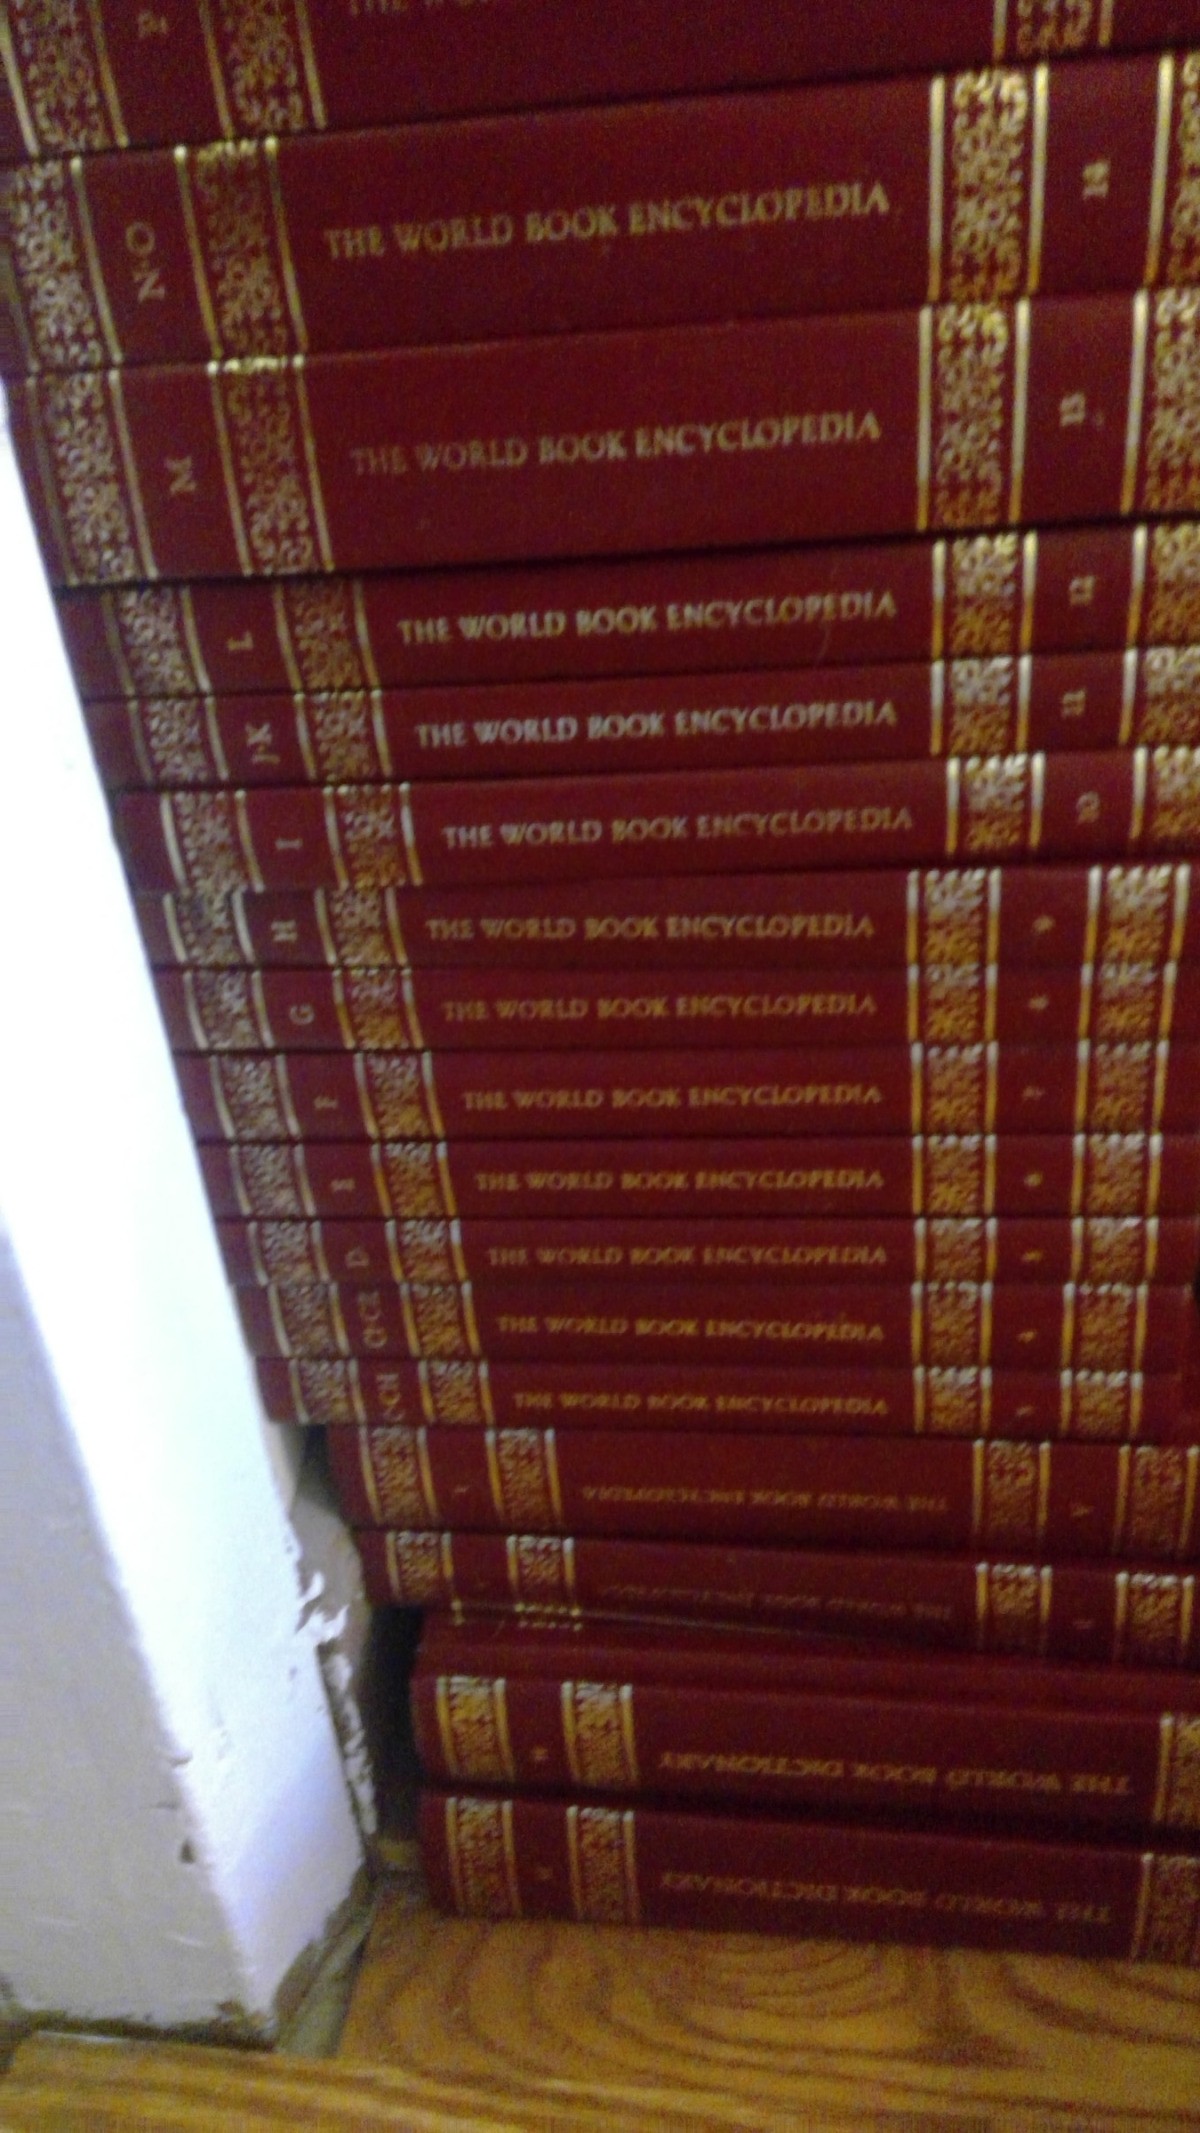 Finding the Value of World Book Encyclopedias? ThriftyFun